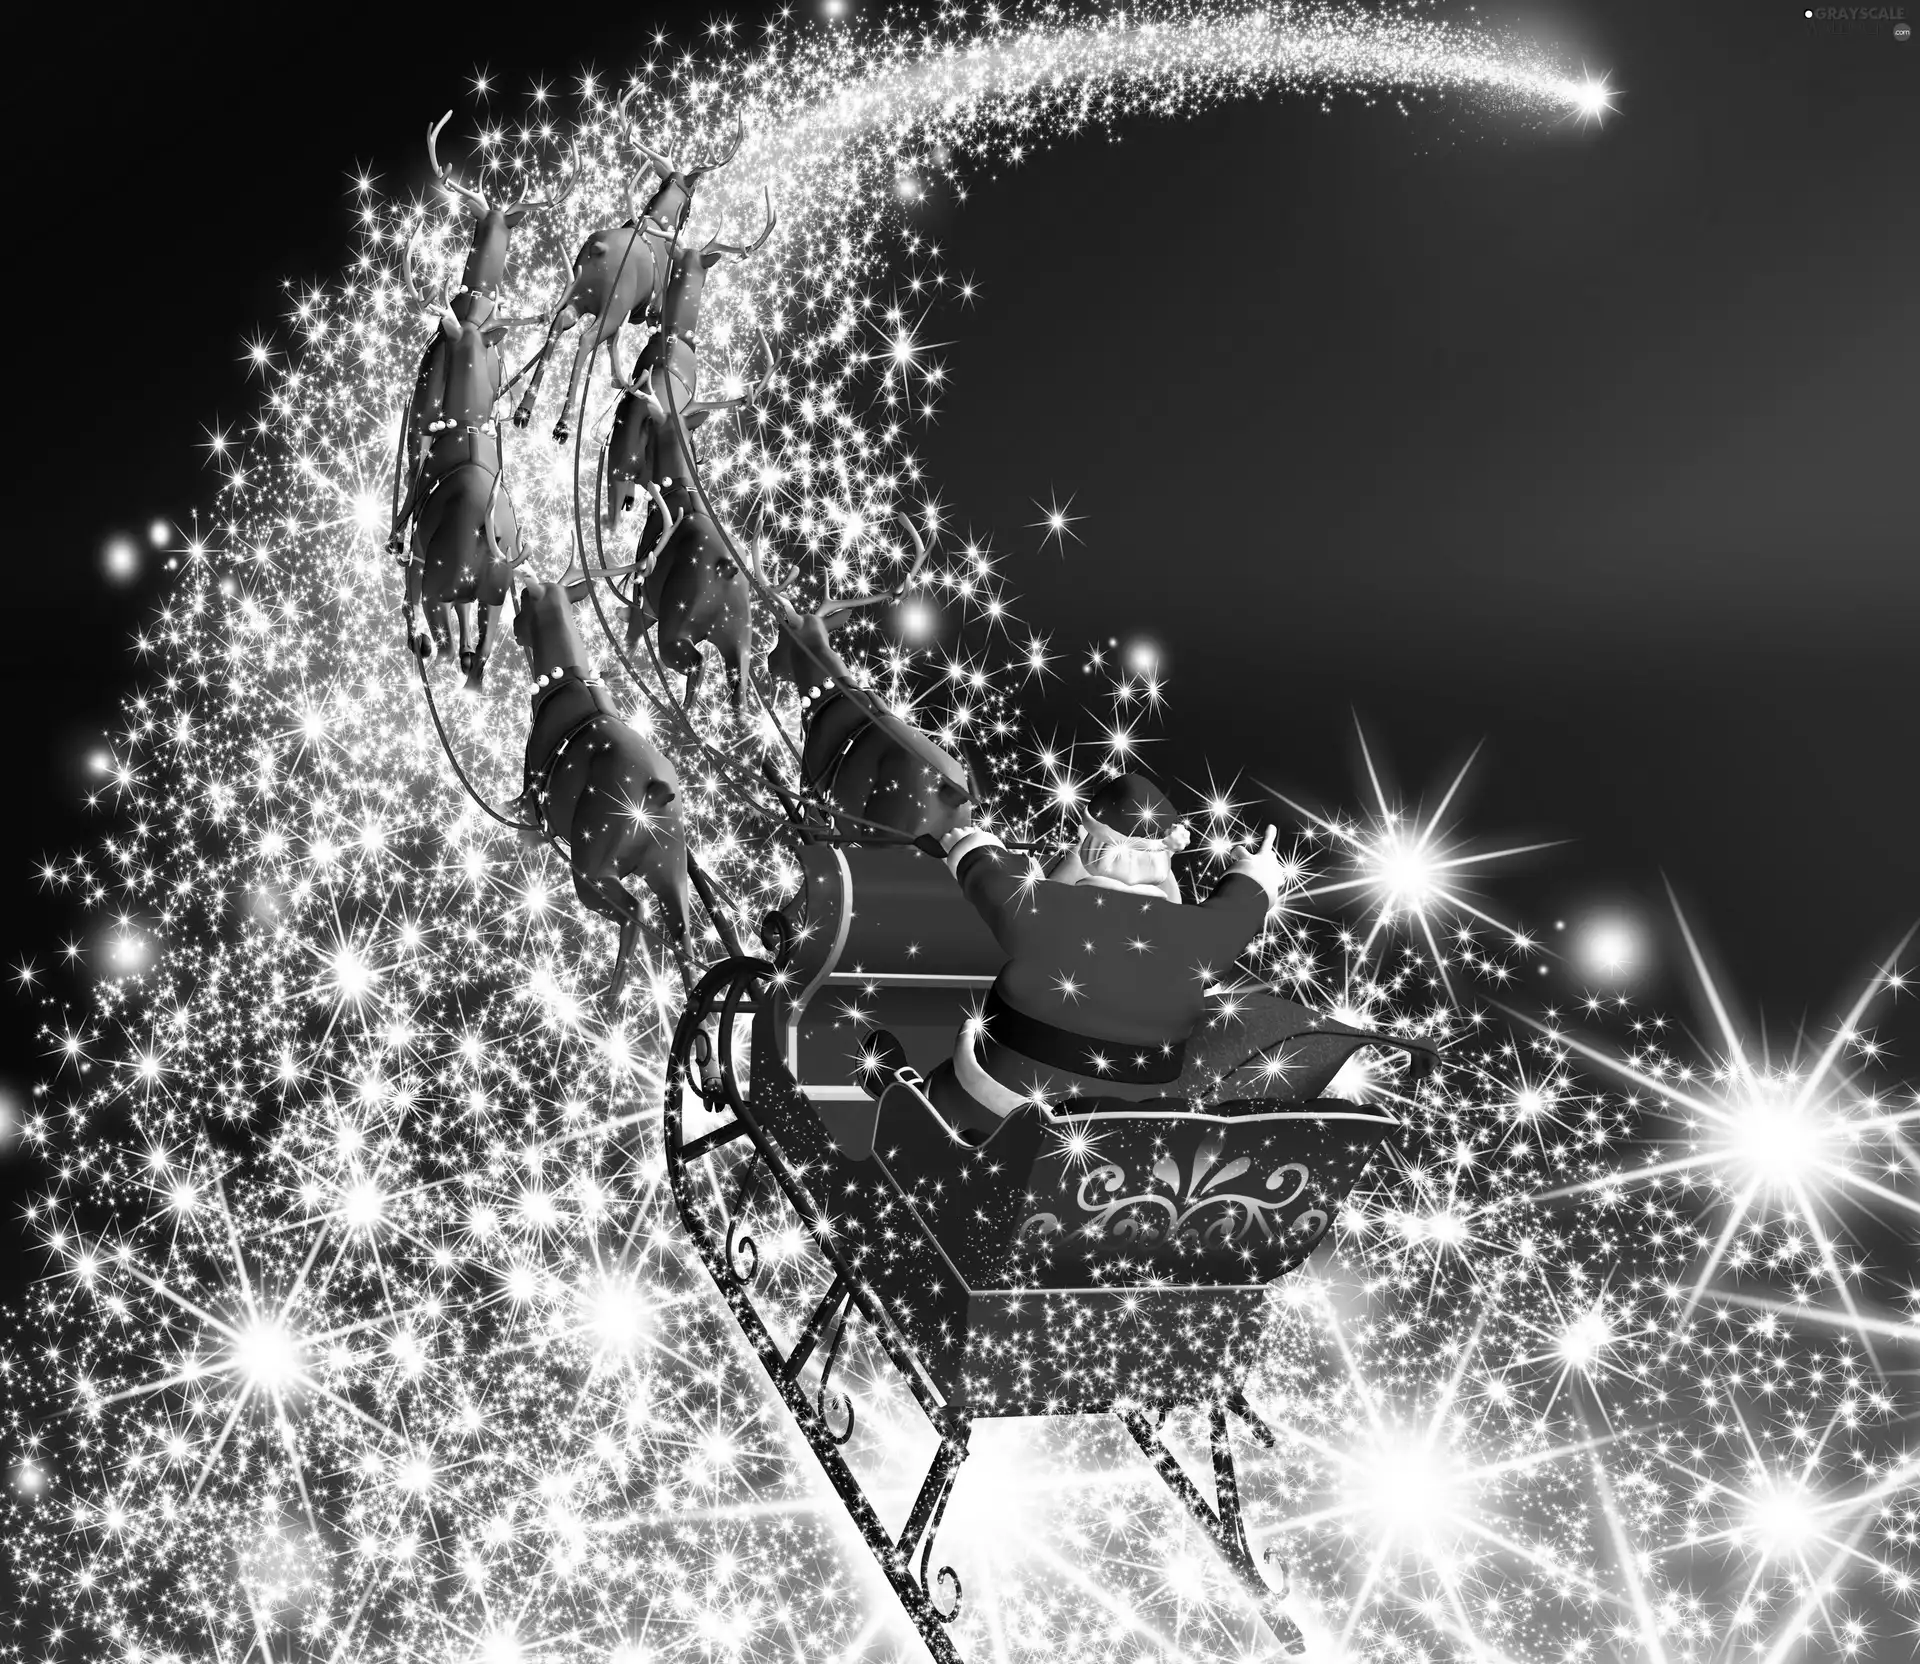 Stars, Santa, sleigh